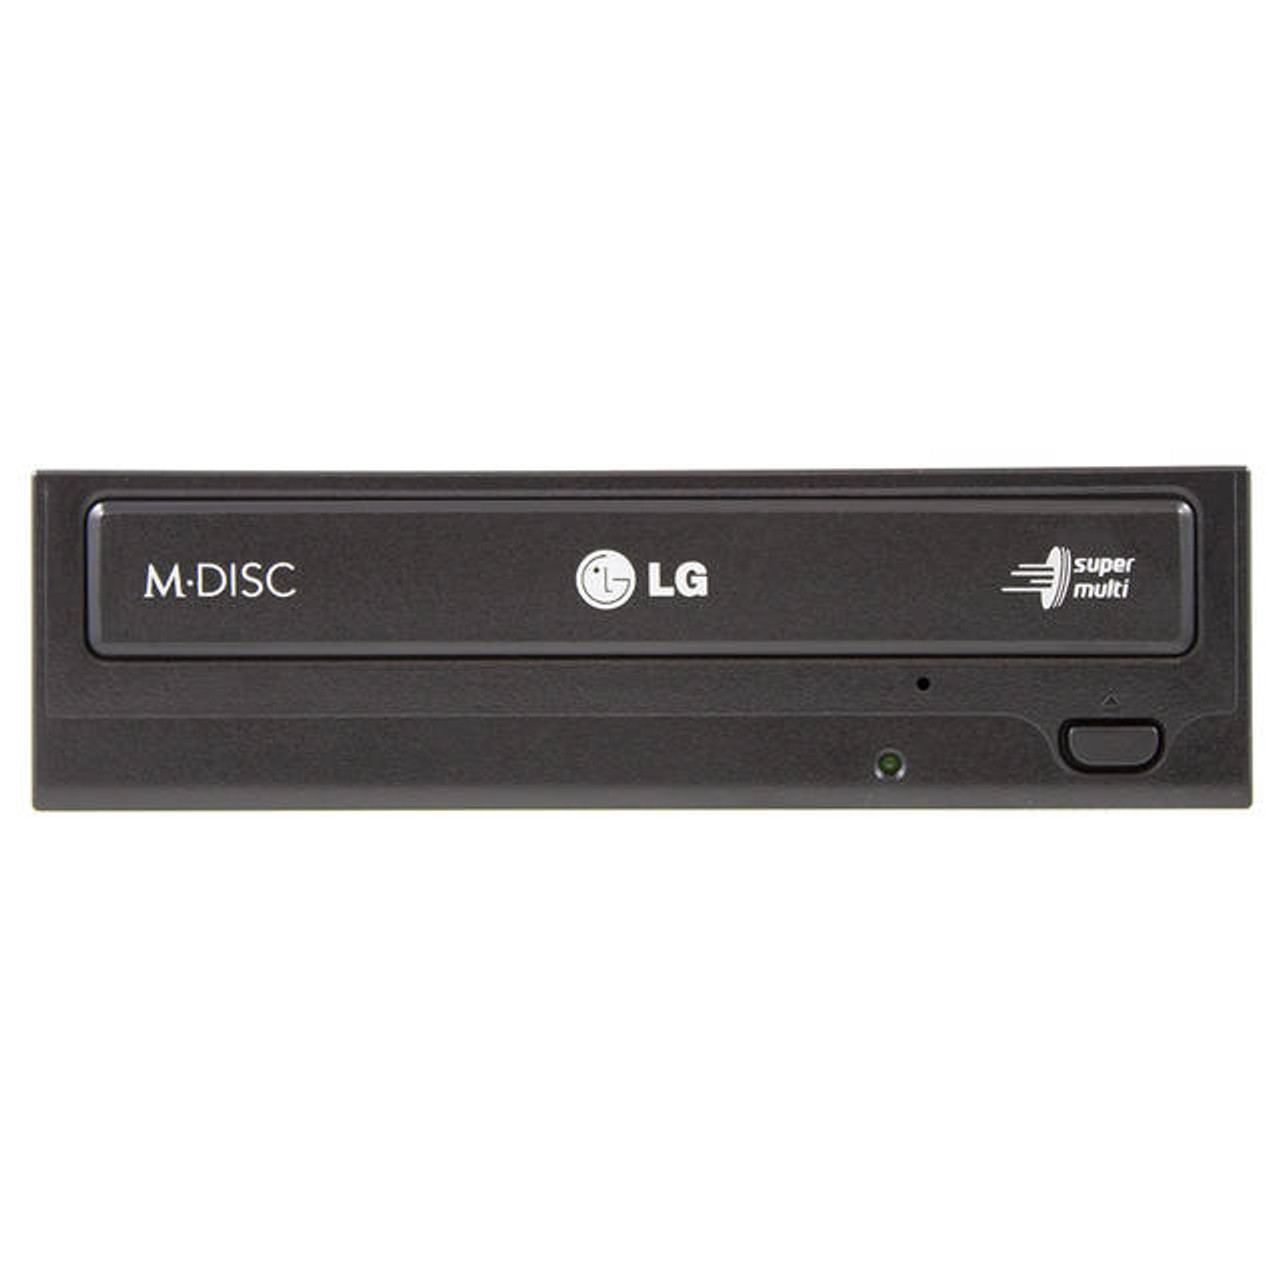 LG Electronics GH24NSC0R 24X SATA Super-Multi DVD Internal Rewriter,